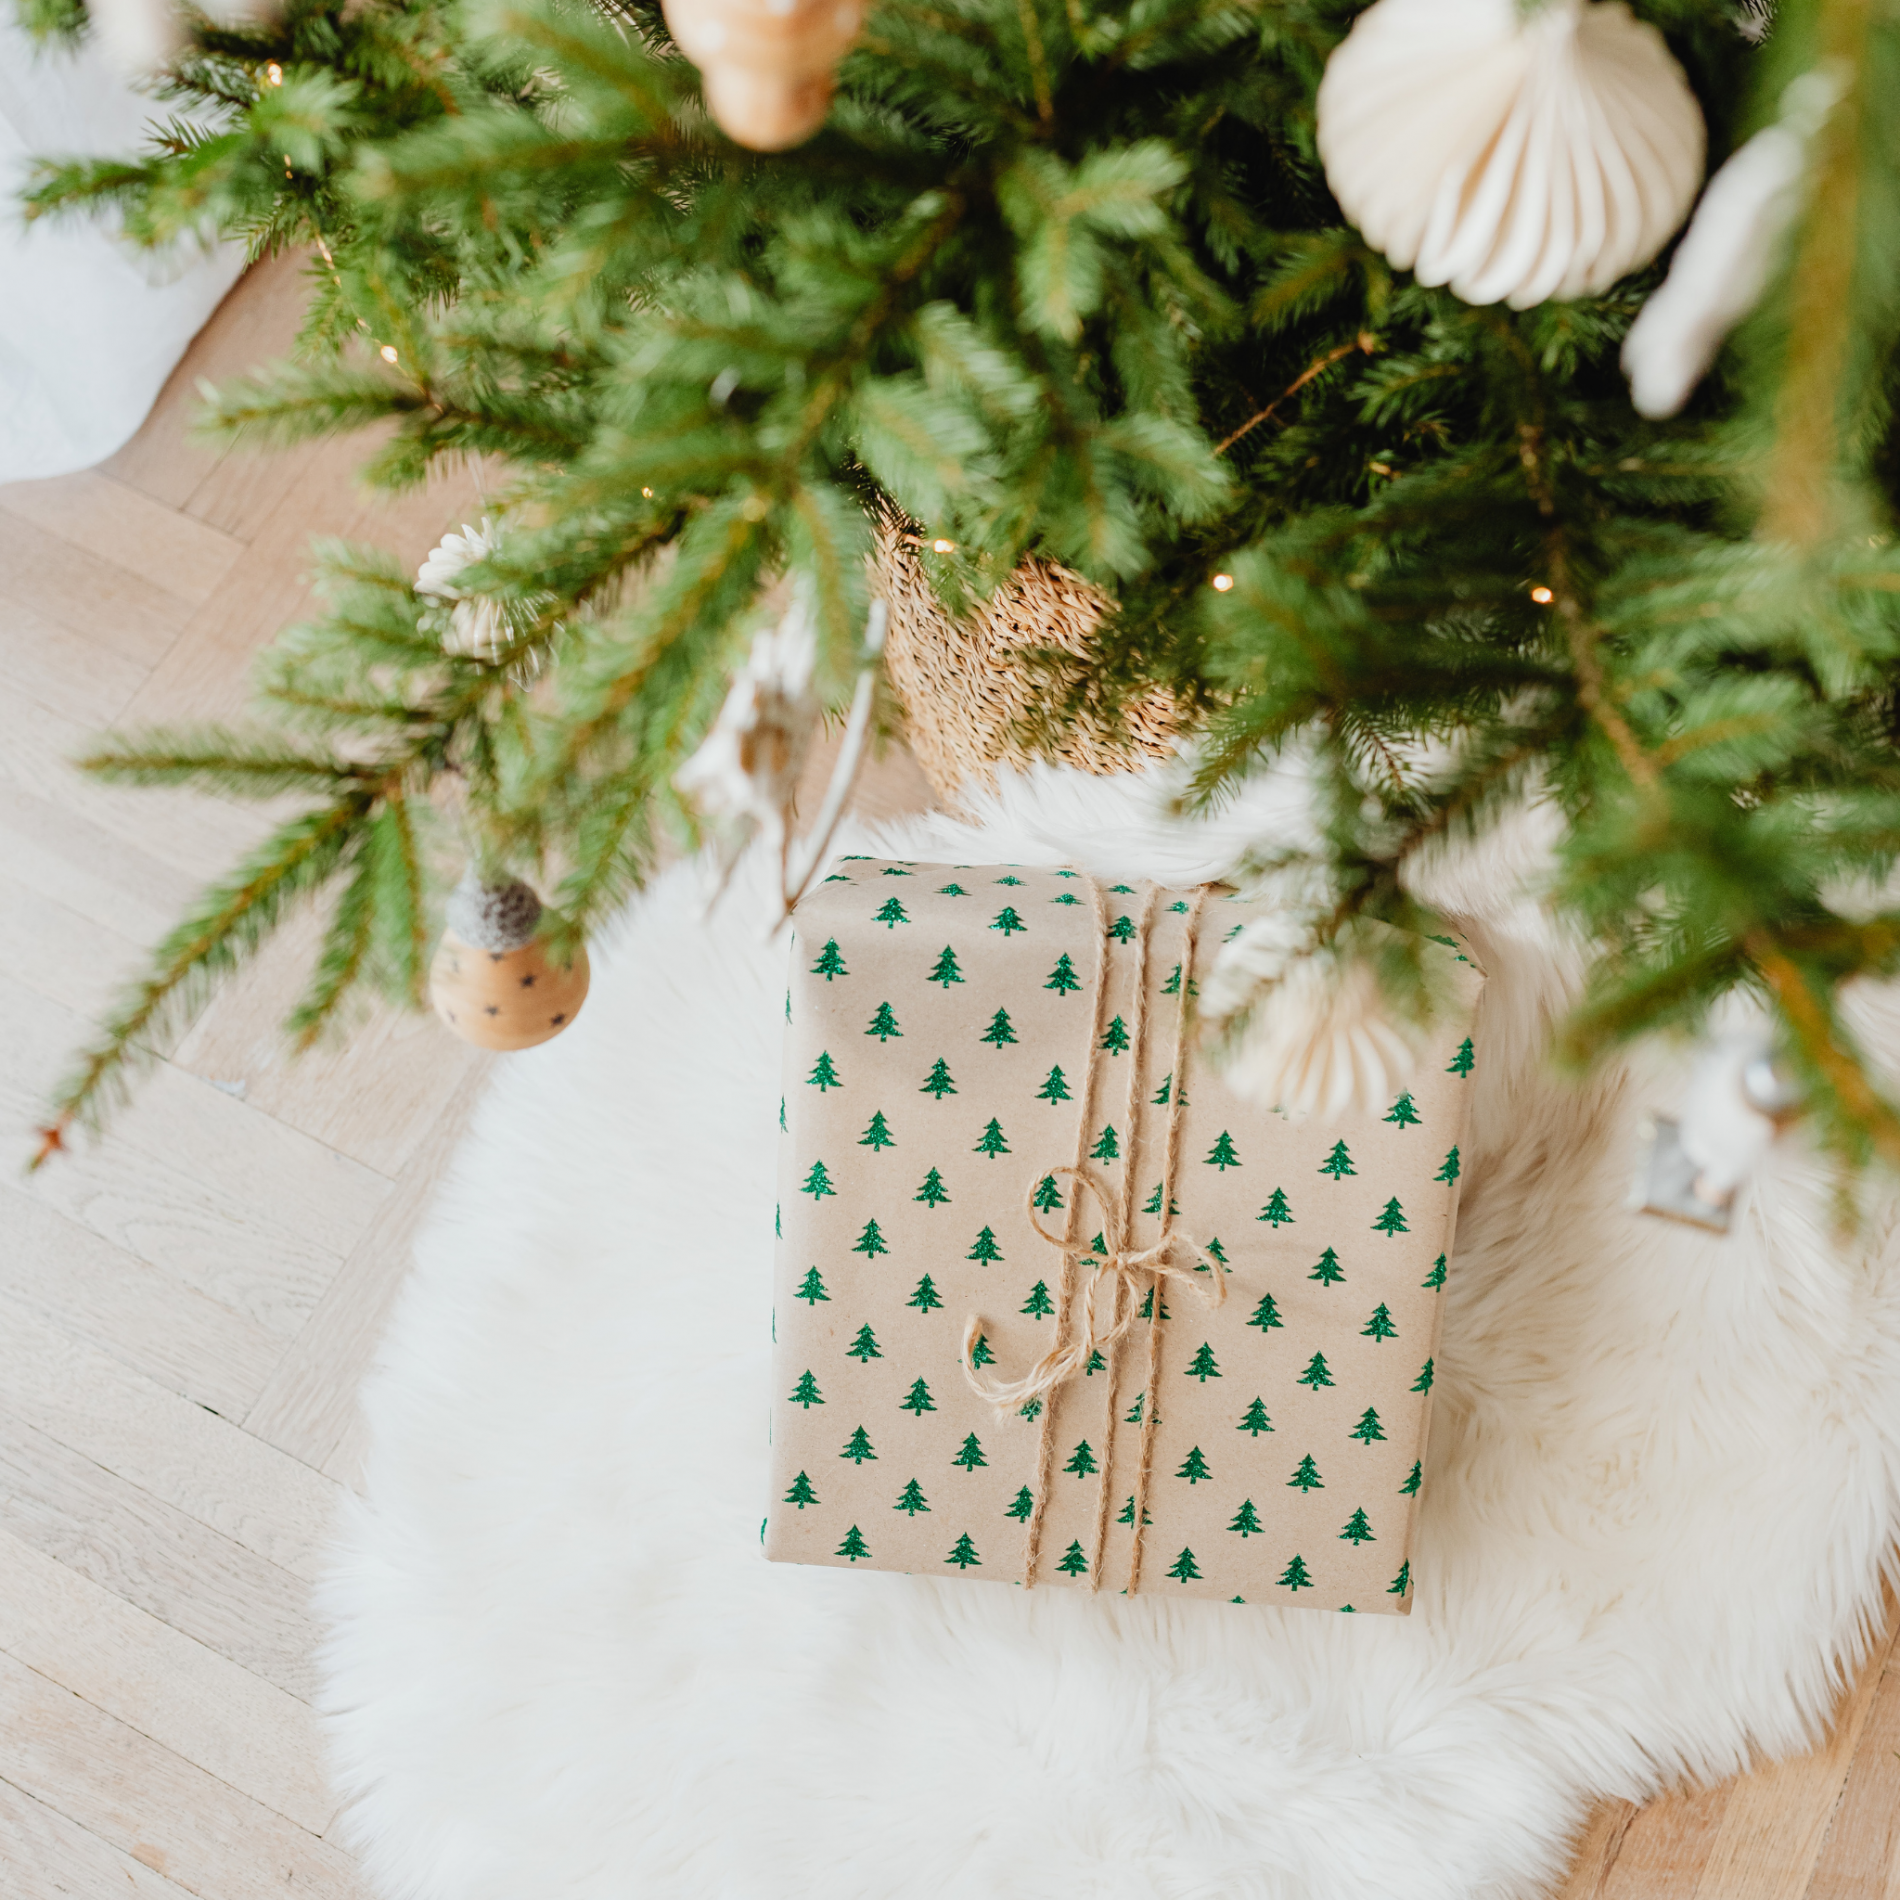 15 last minute Christmas gift ideas - Present under the Christmas tree